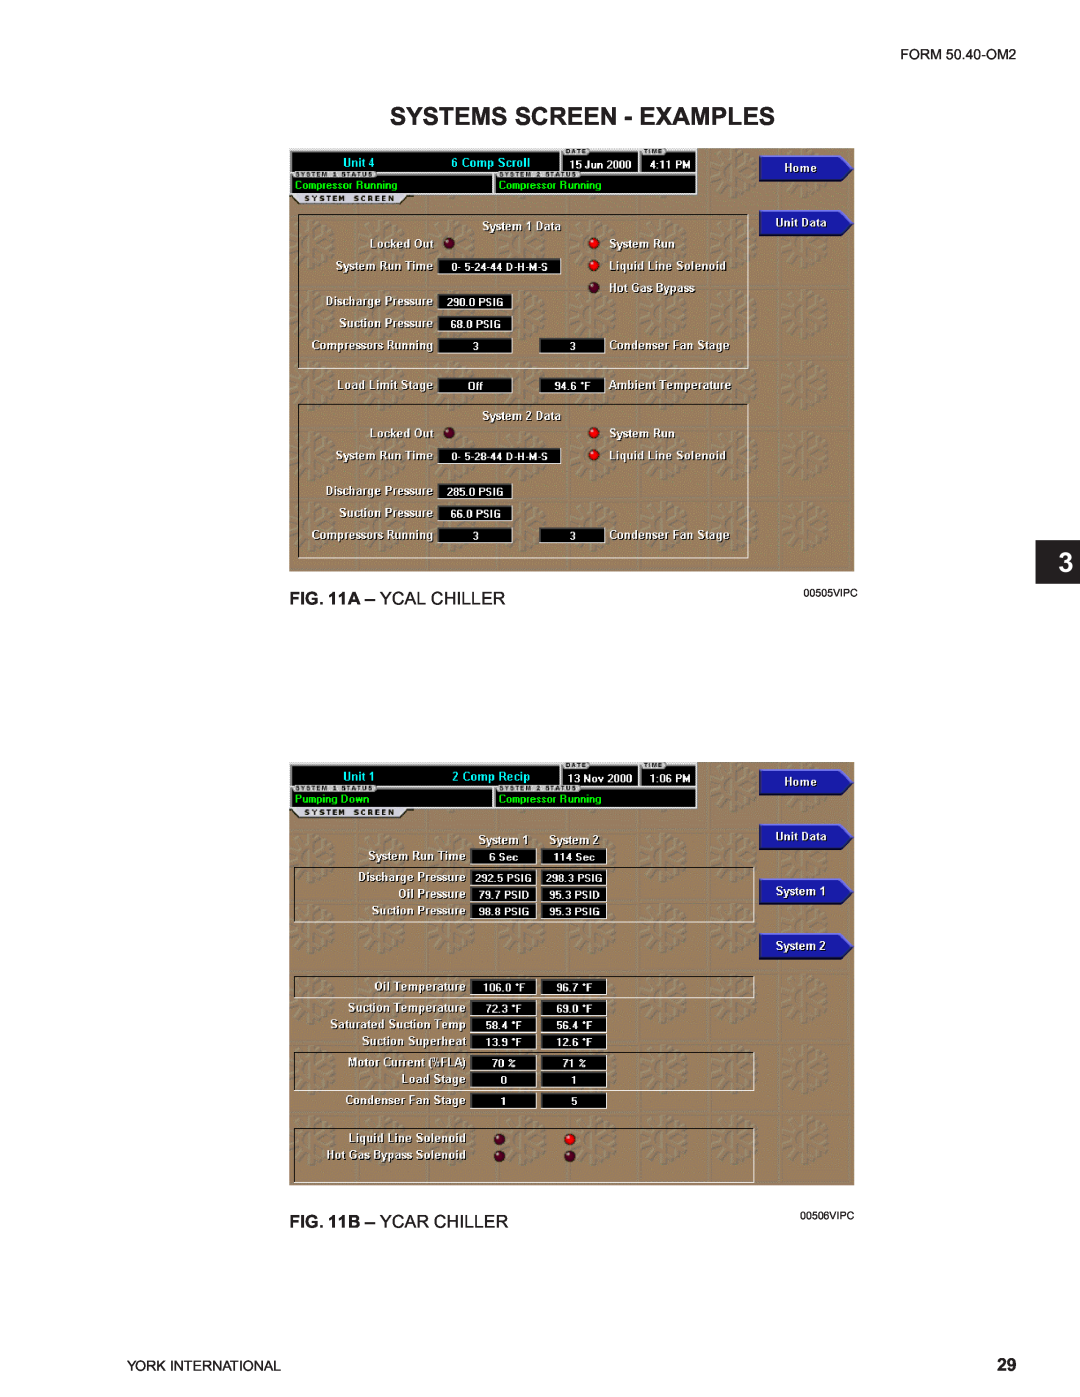 York 00497VIP manual Systems Screen - Examples, A – Ycal Chiller, B – Ycar Chiller, 00505VIPC, 00506VIPC 